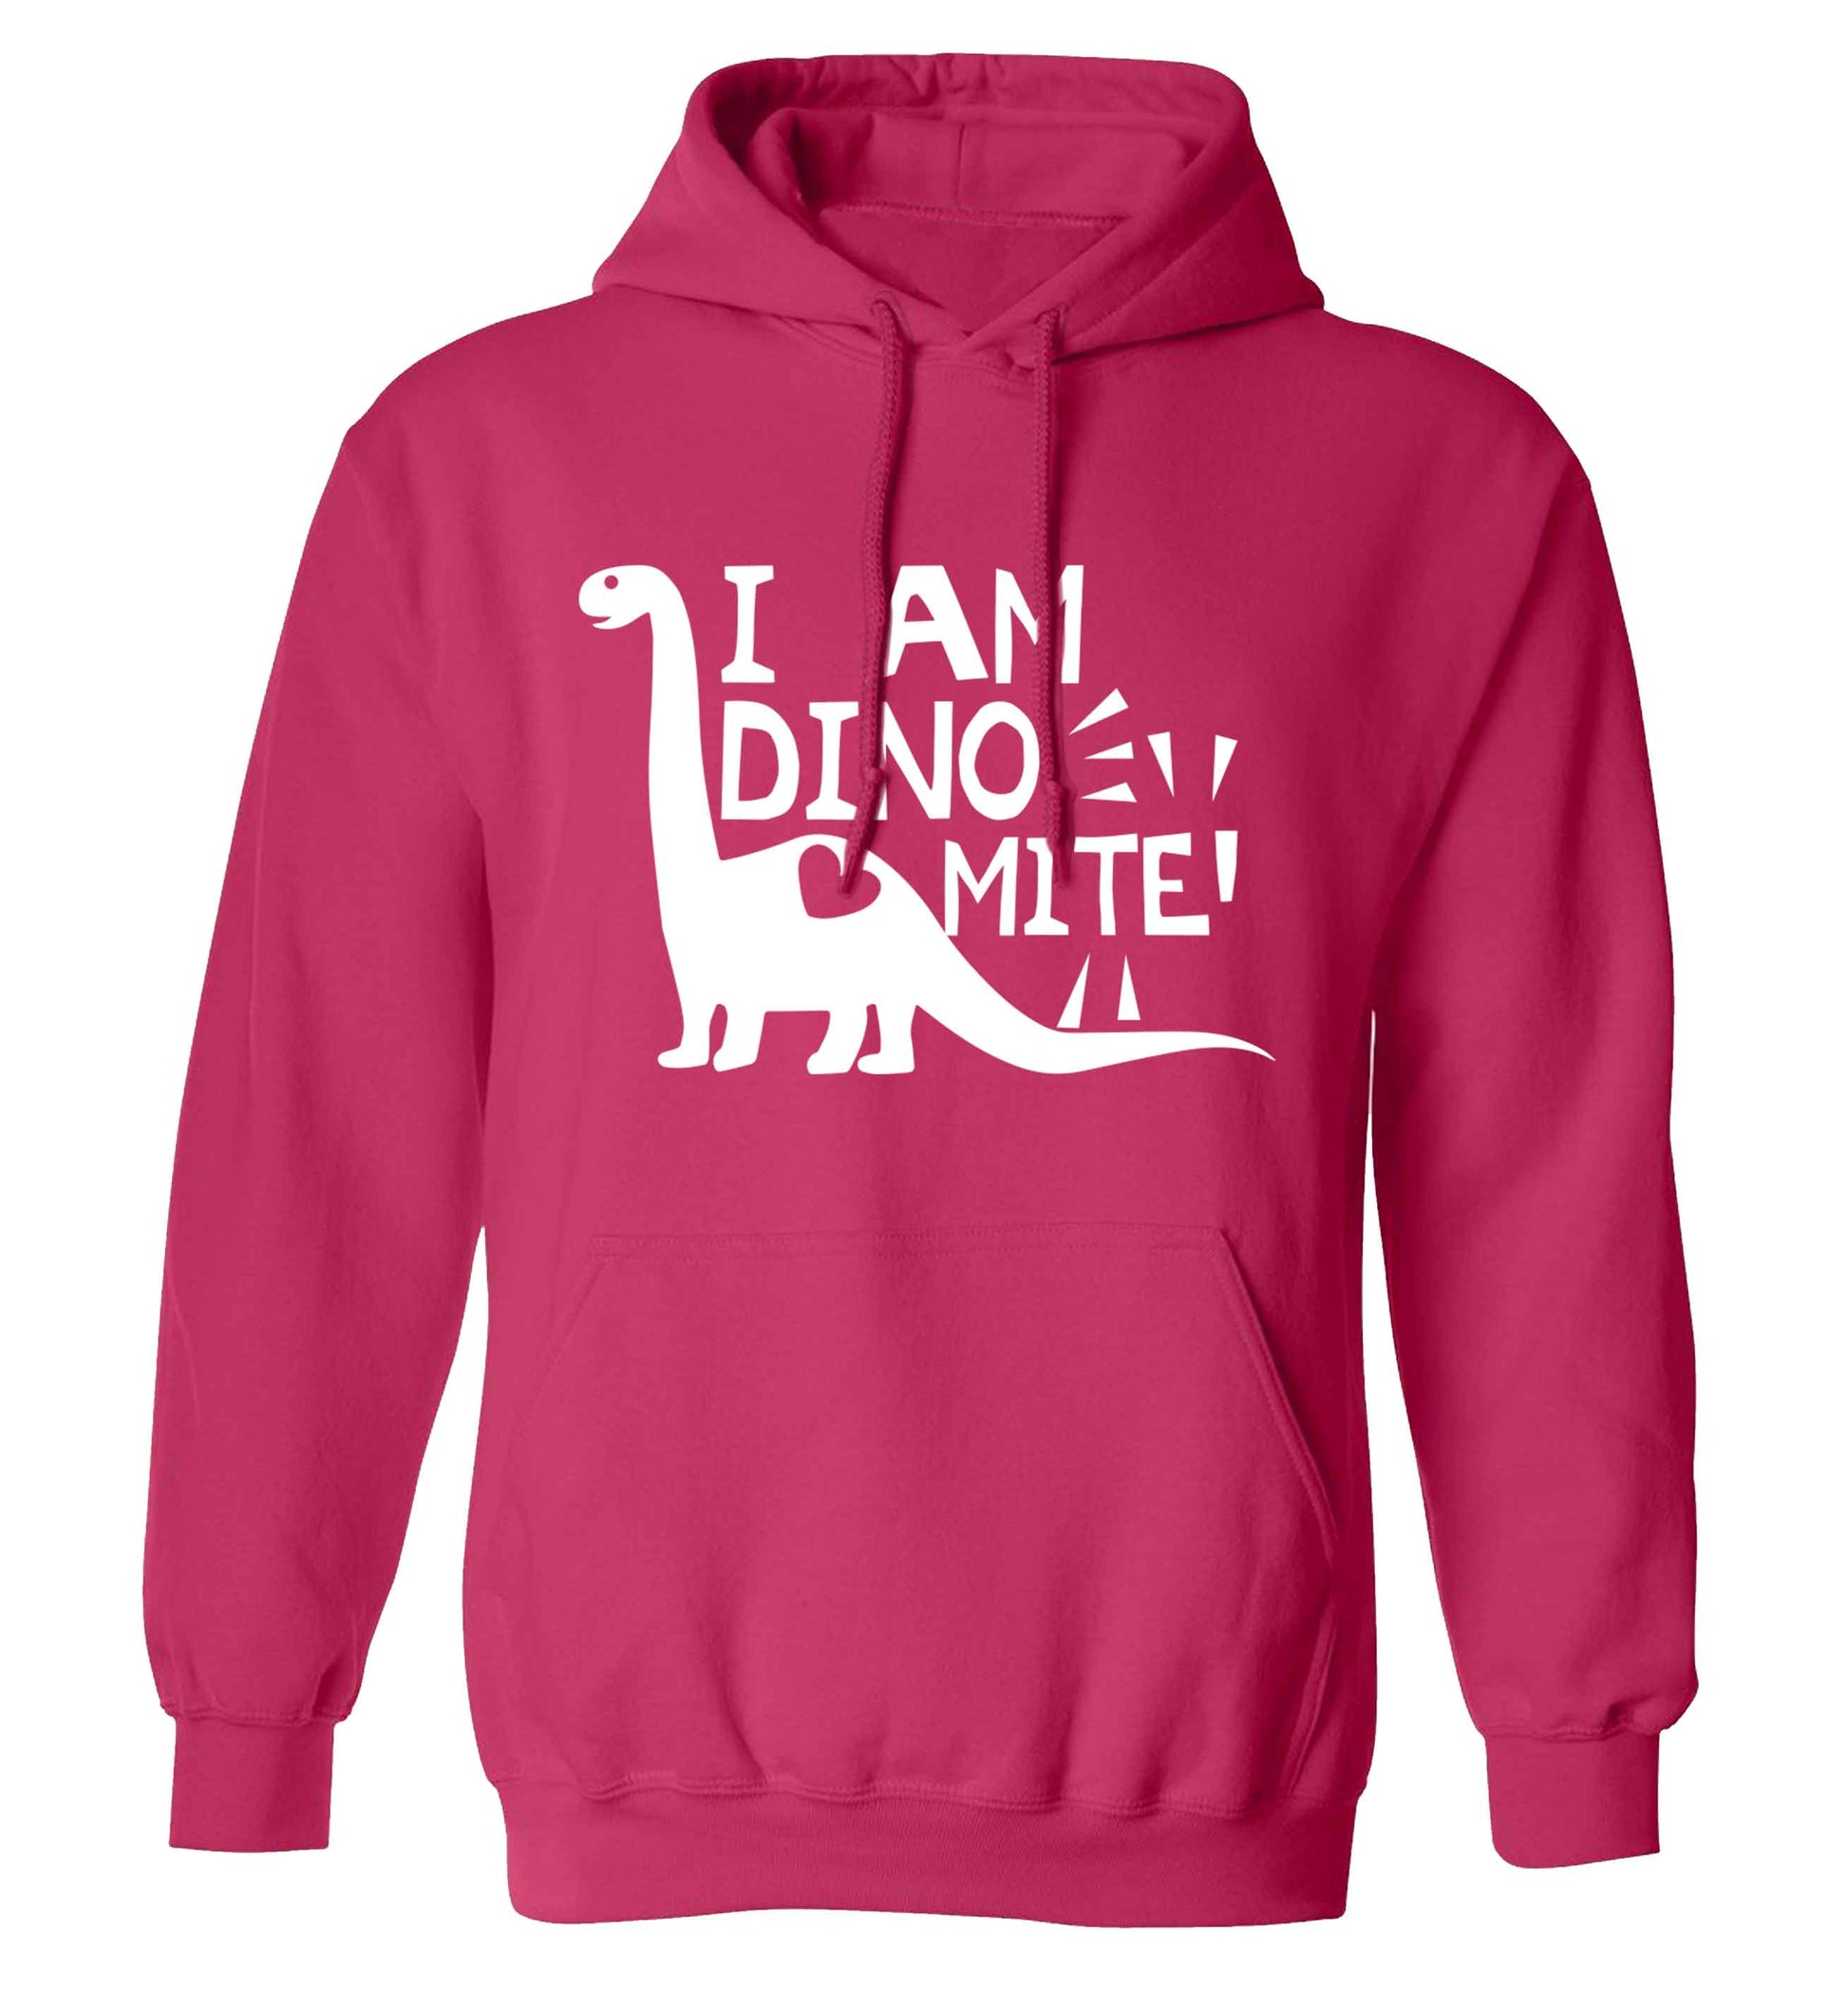 I am dinomite! adults unisex pink hoodie 2XL